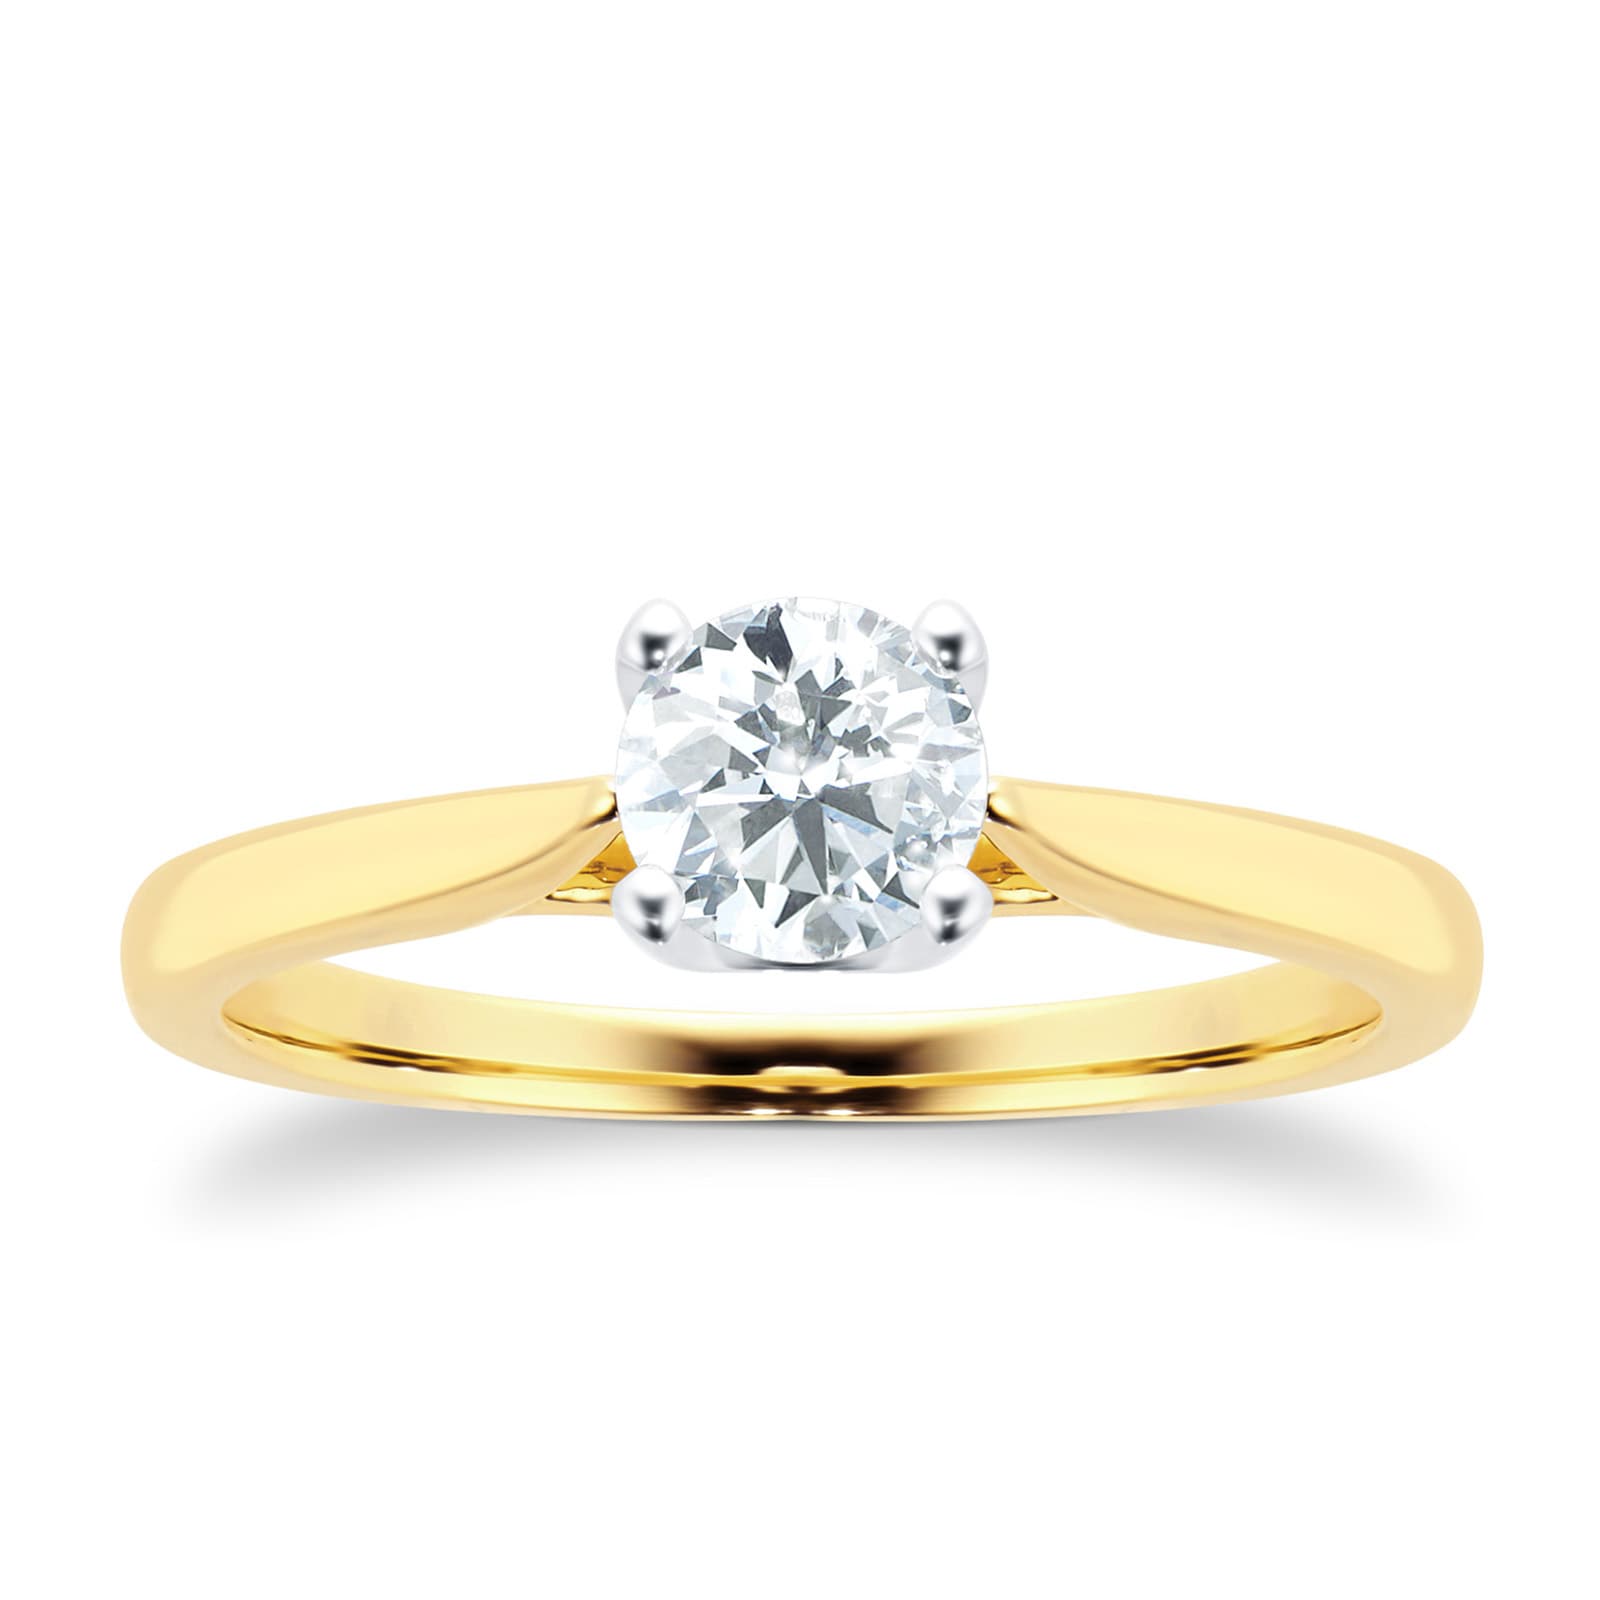 18ct Yellow Gold Brilliant Cut 0.50 Carat 88 Facet Diamond Ring - Ring Size L